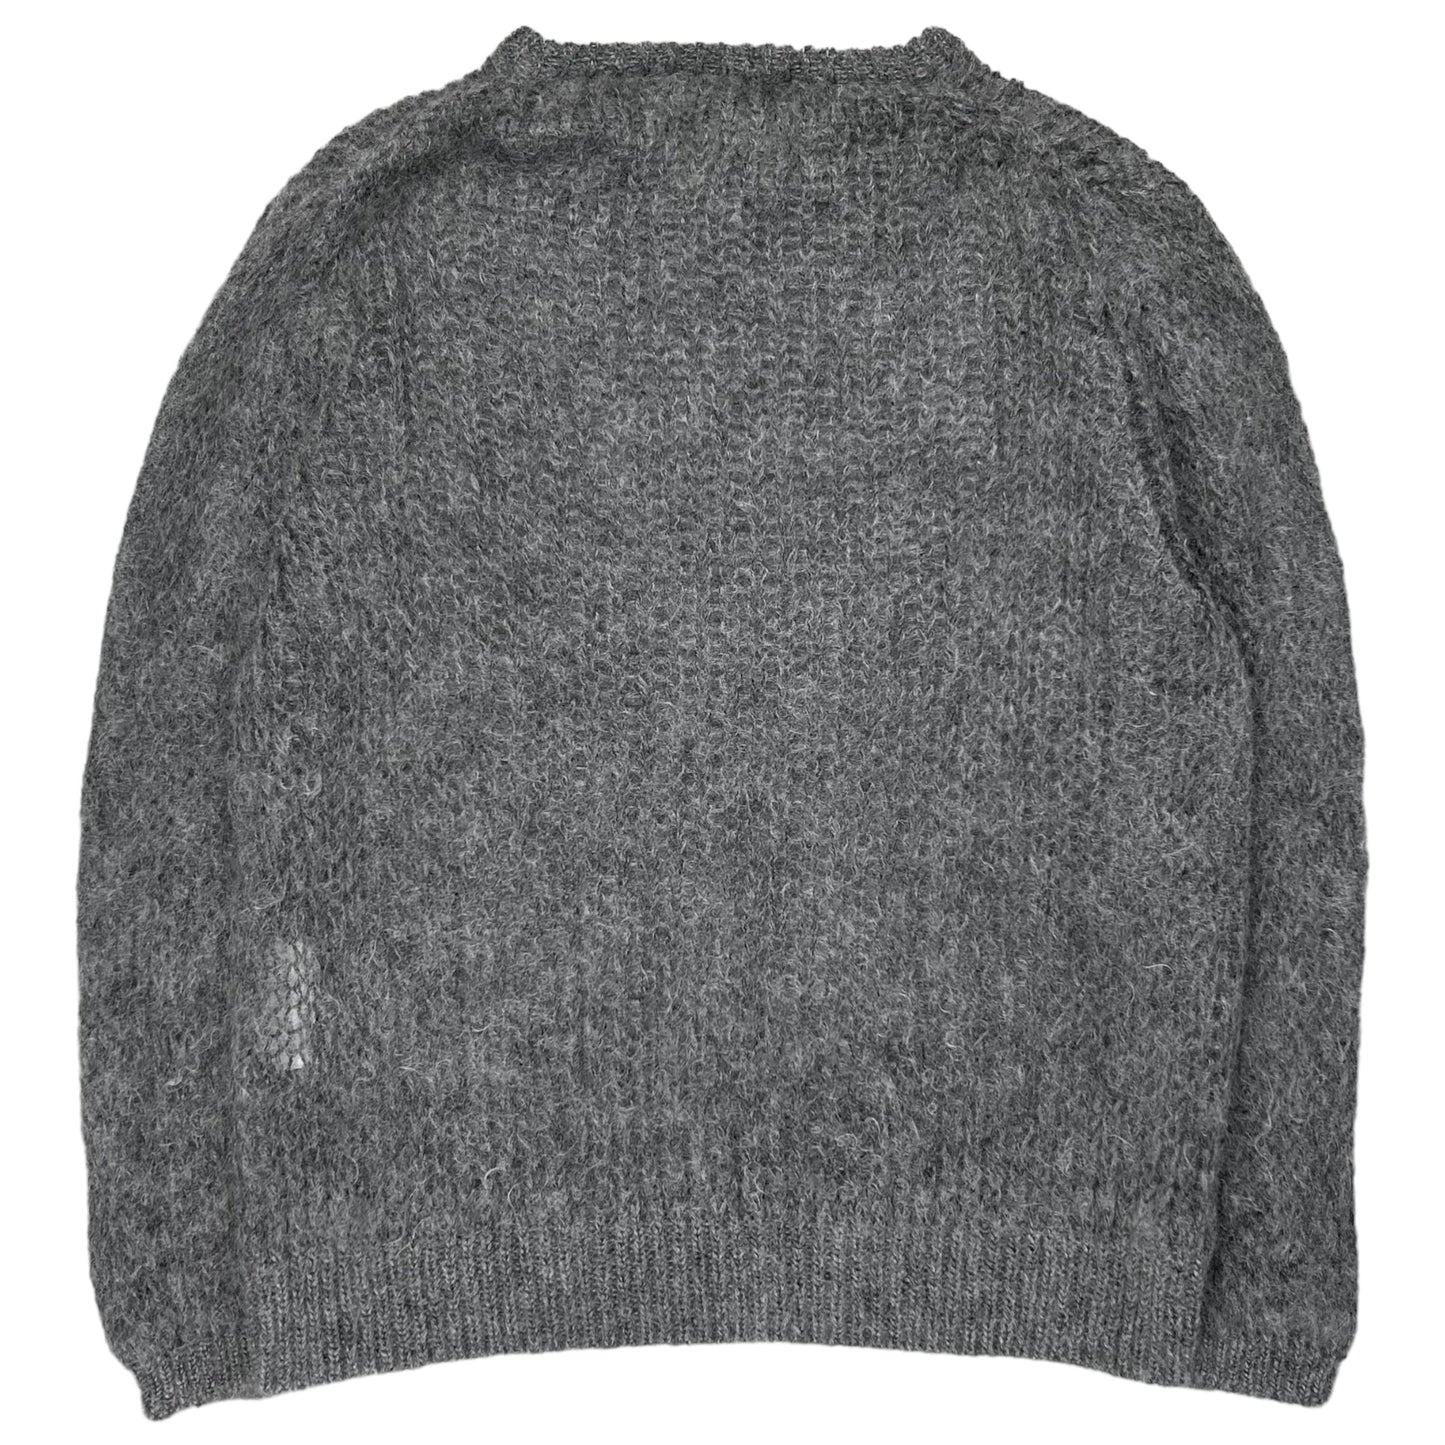 Comme des Garcons Mohair Crotchet Knit Sweater - AW10